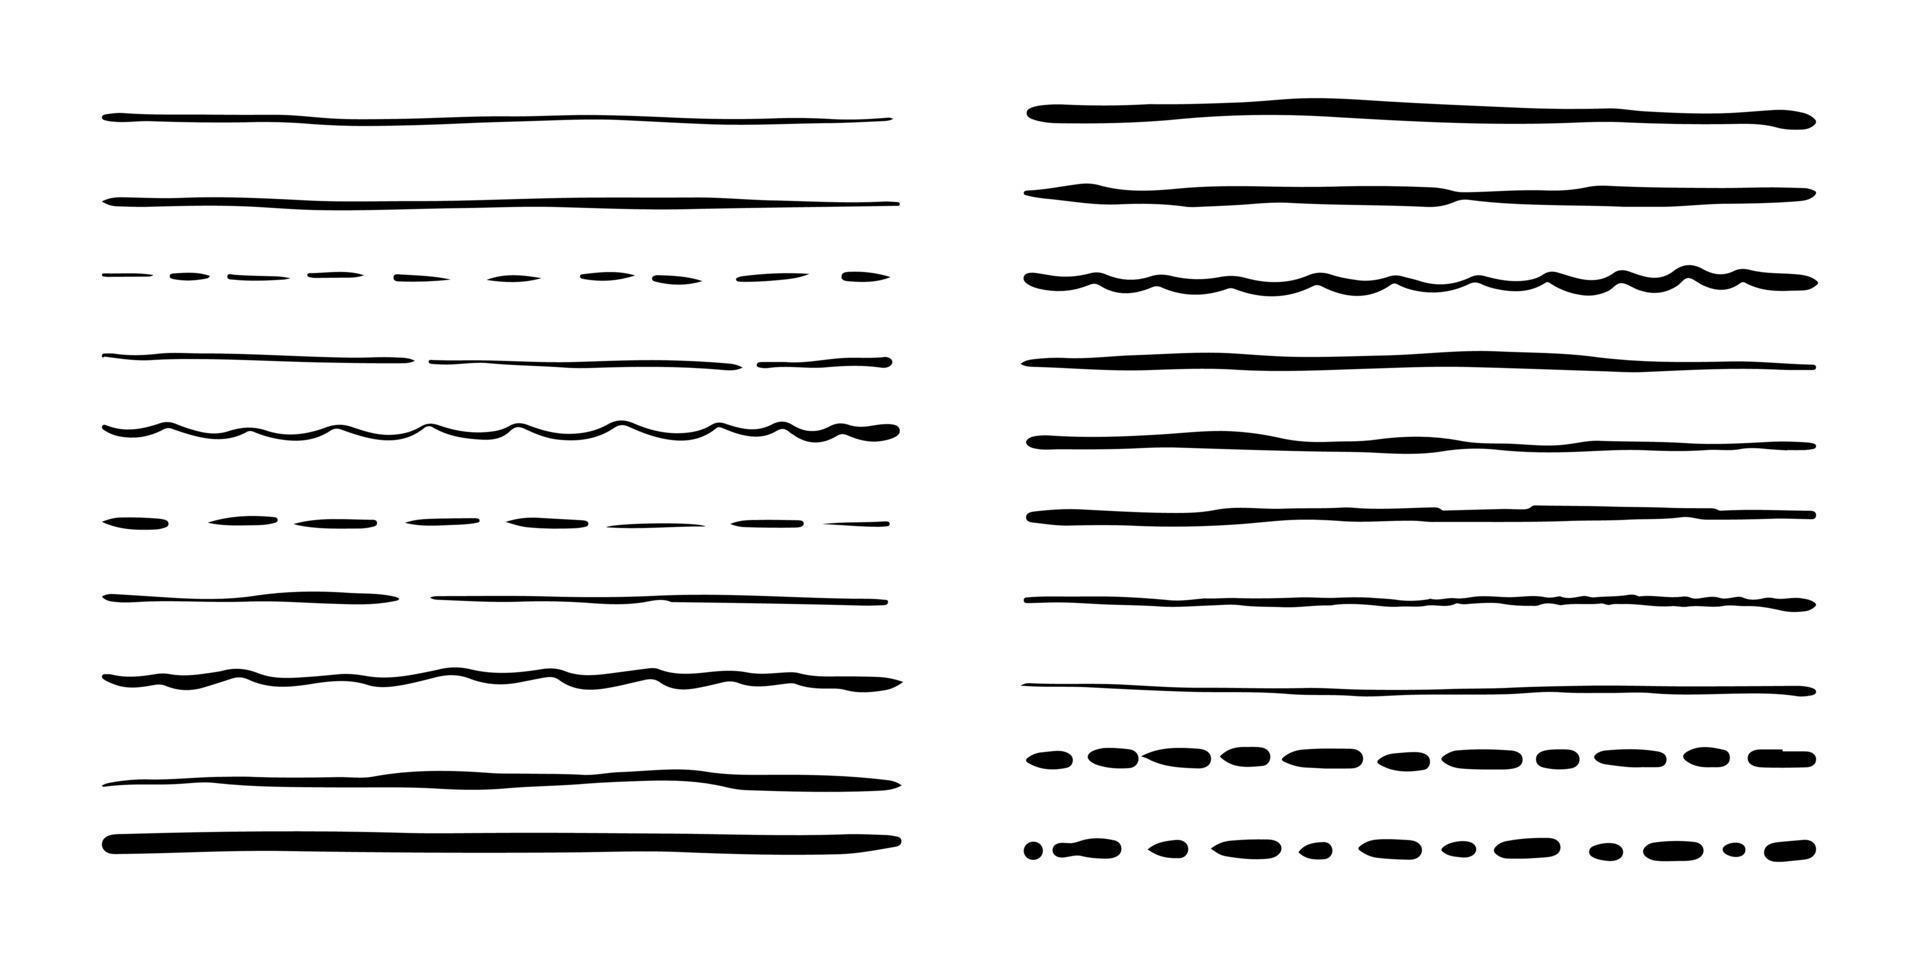 Hand drawn grunge brushes. Set of artistic pen brushes isolated on white background. Vector illustration.